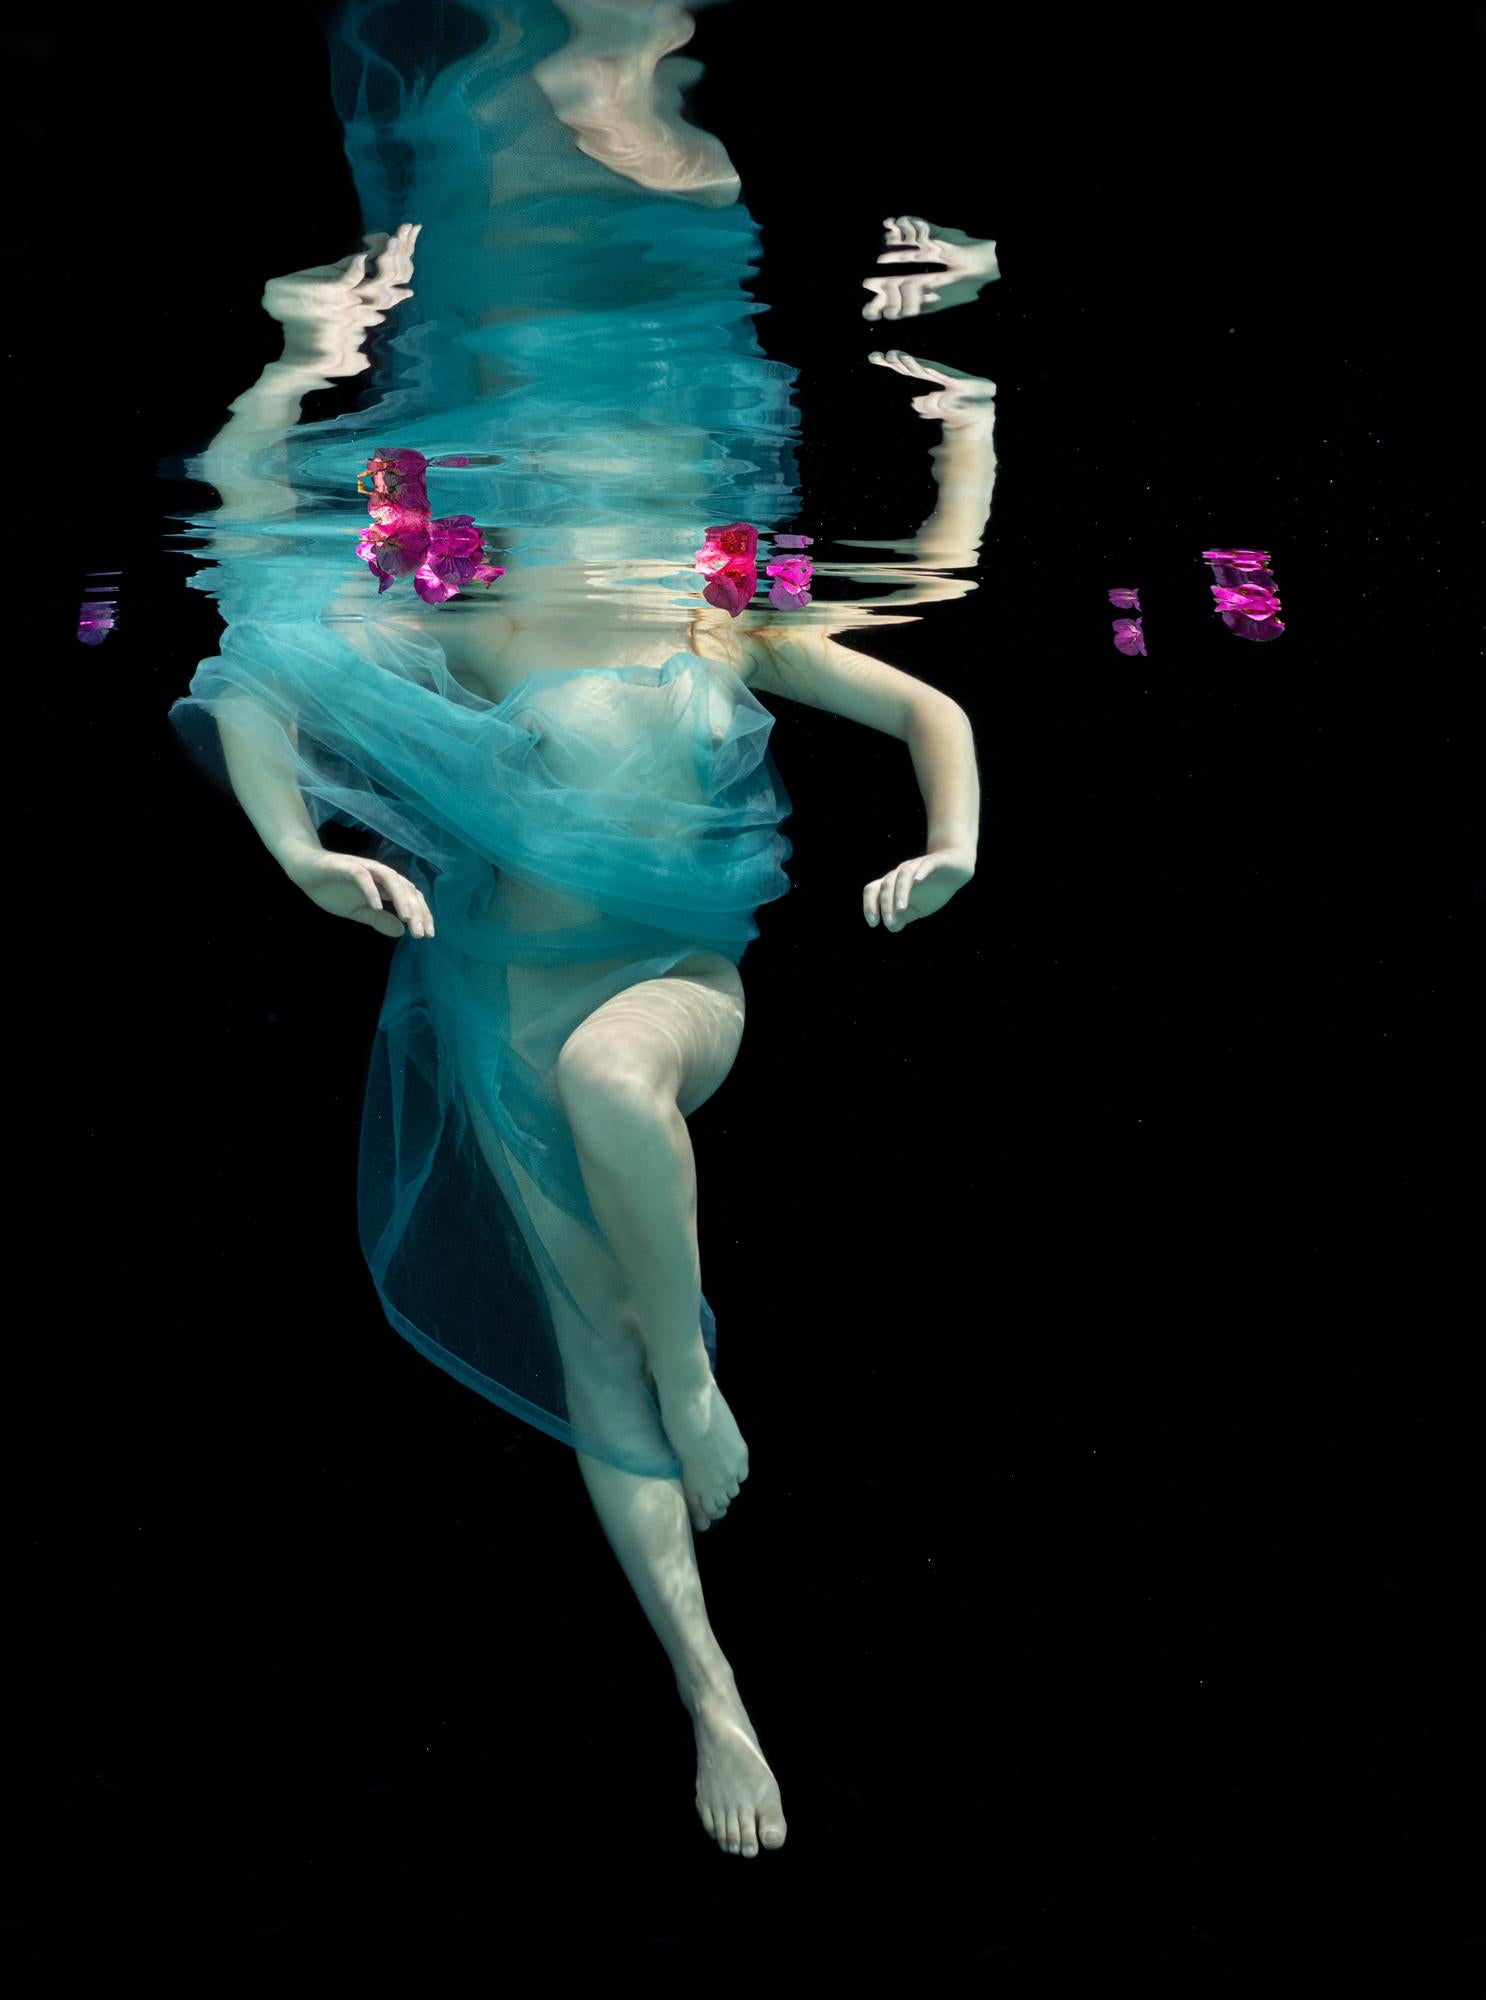 Alex Sher Figurative Photograph - Dancing Flowers   - underwater nude photograph - print on aluminum 48" x 36"